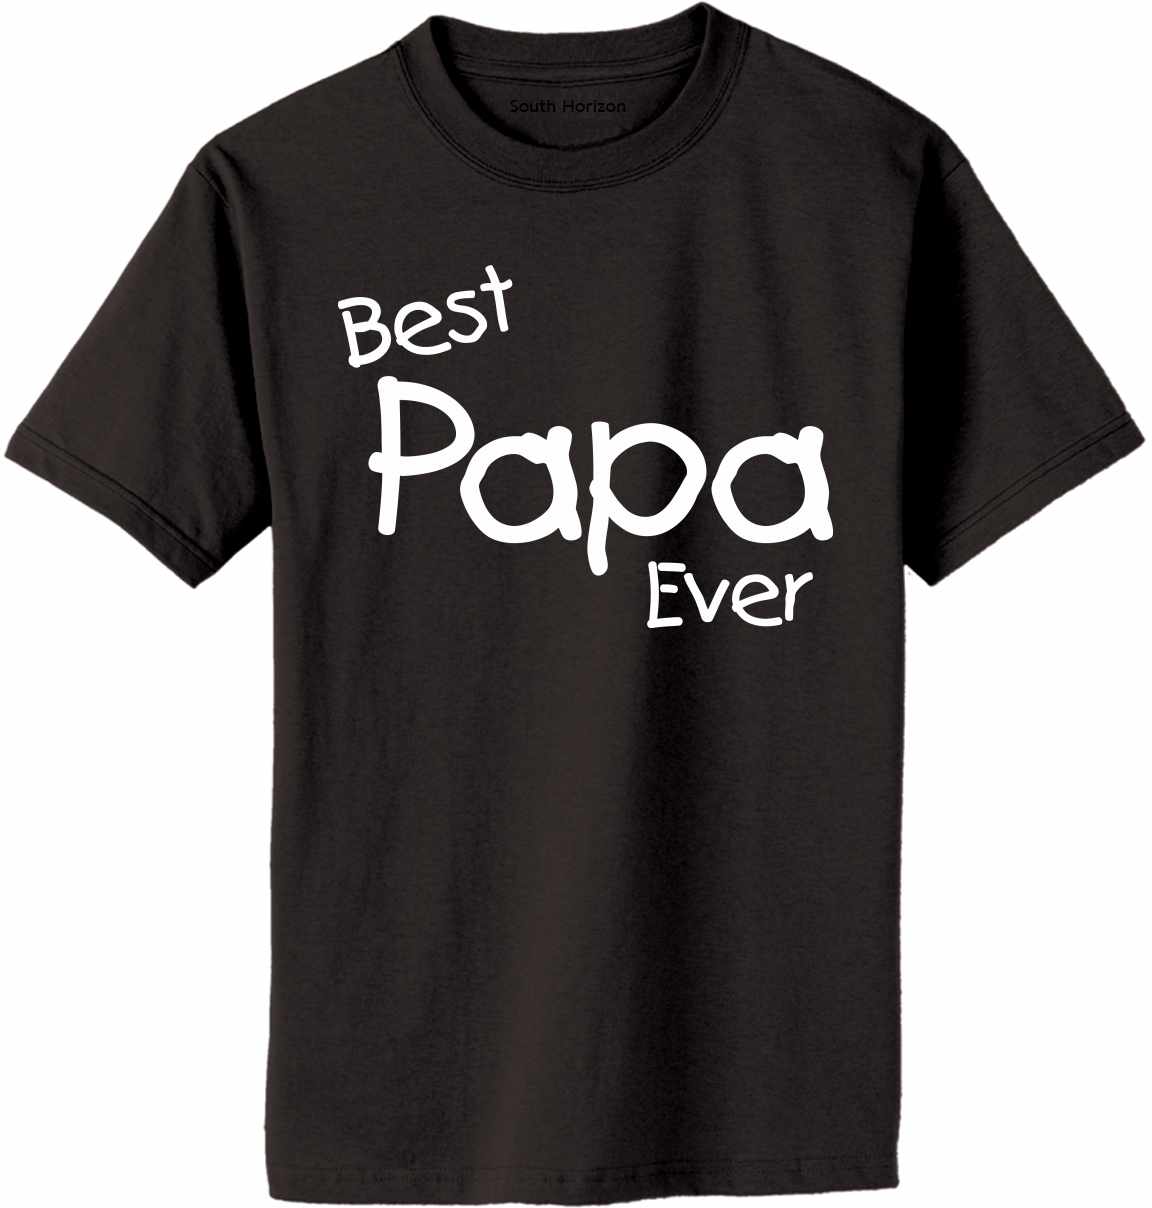 Best Papa Ever Adult T-Shirt